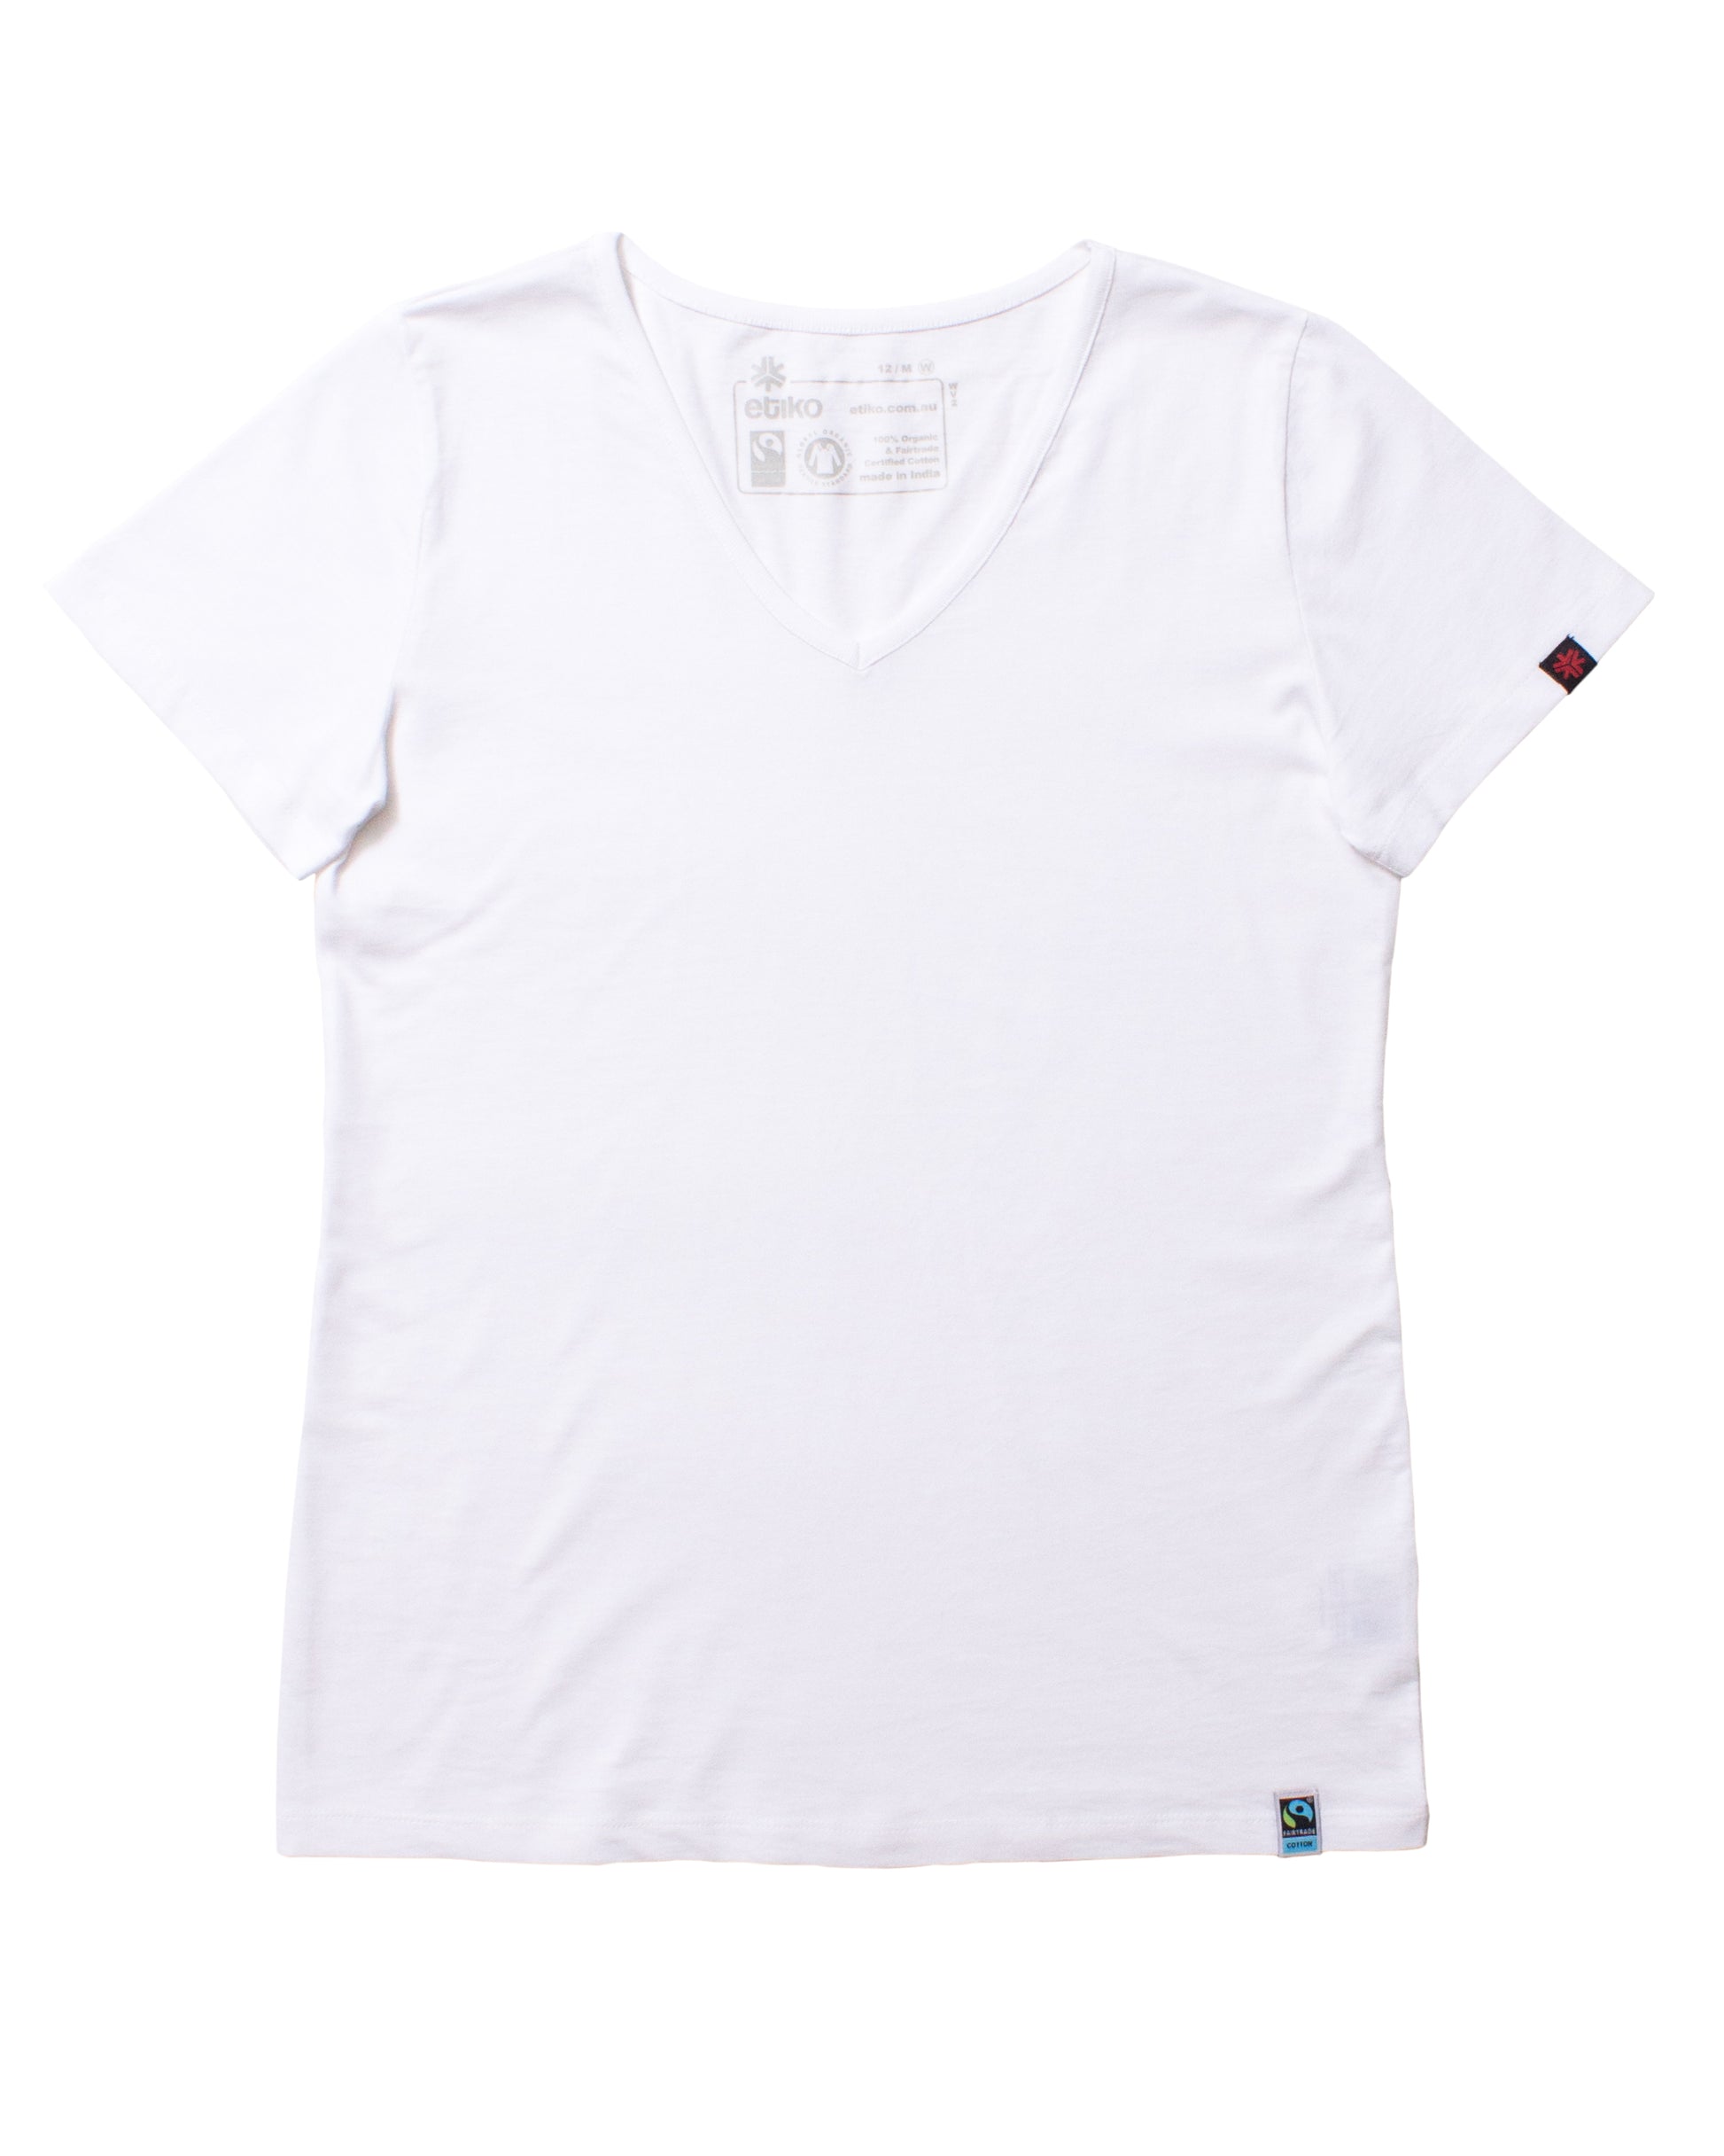 Etiko Fairtrade Certified Organic Cotton White Womens V-Neck T-Shirt, Eco-Friendly